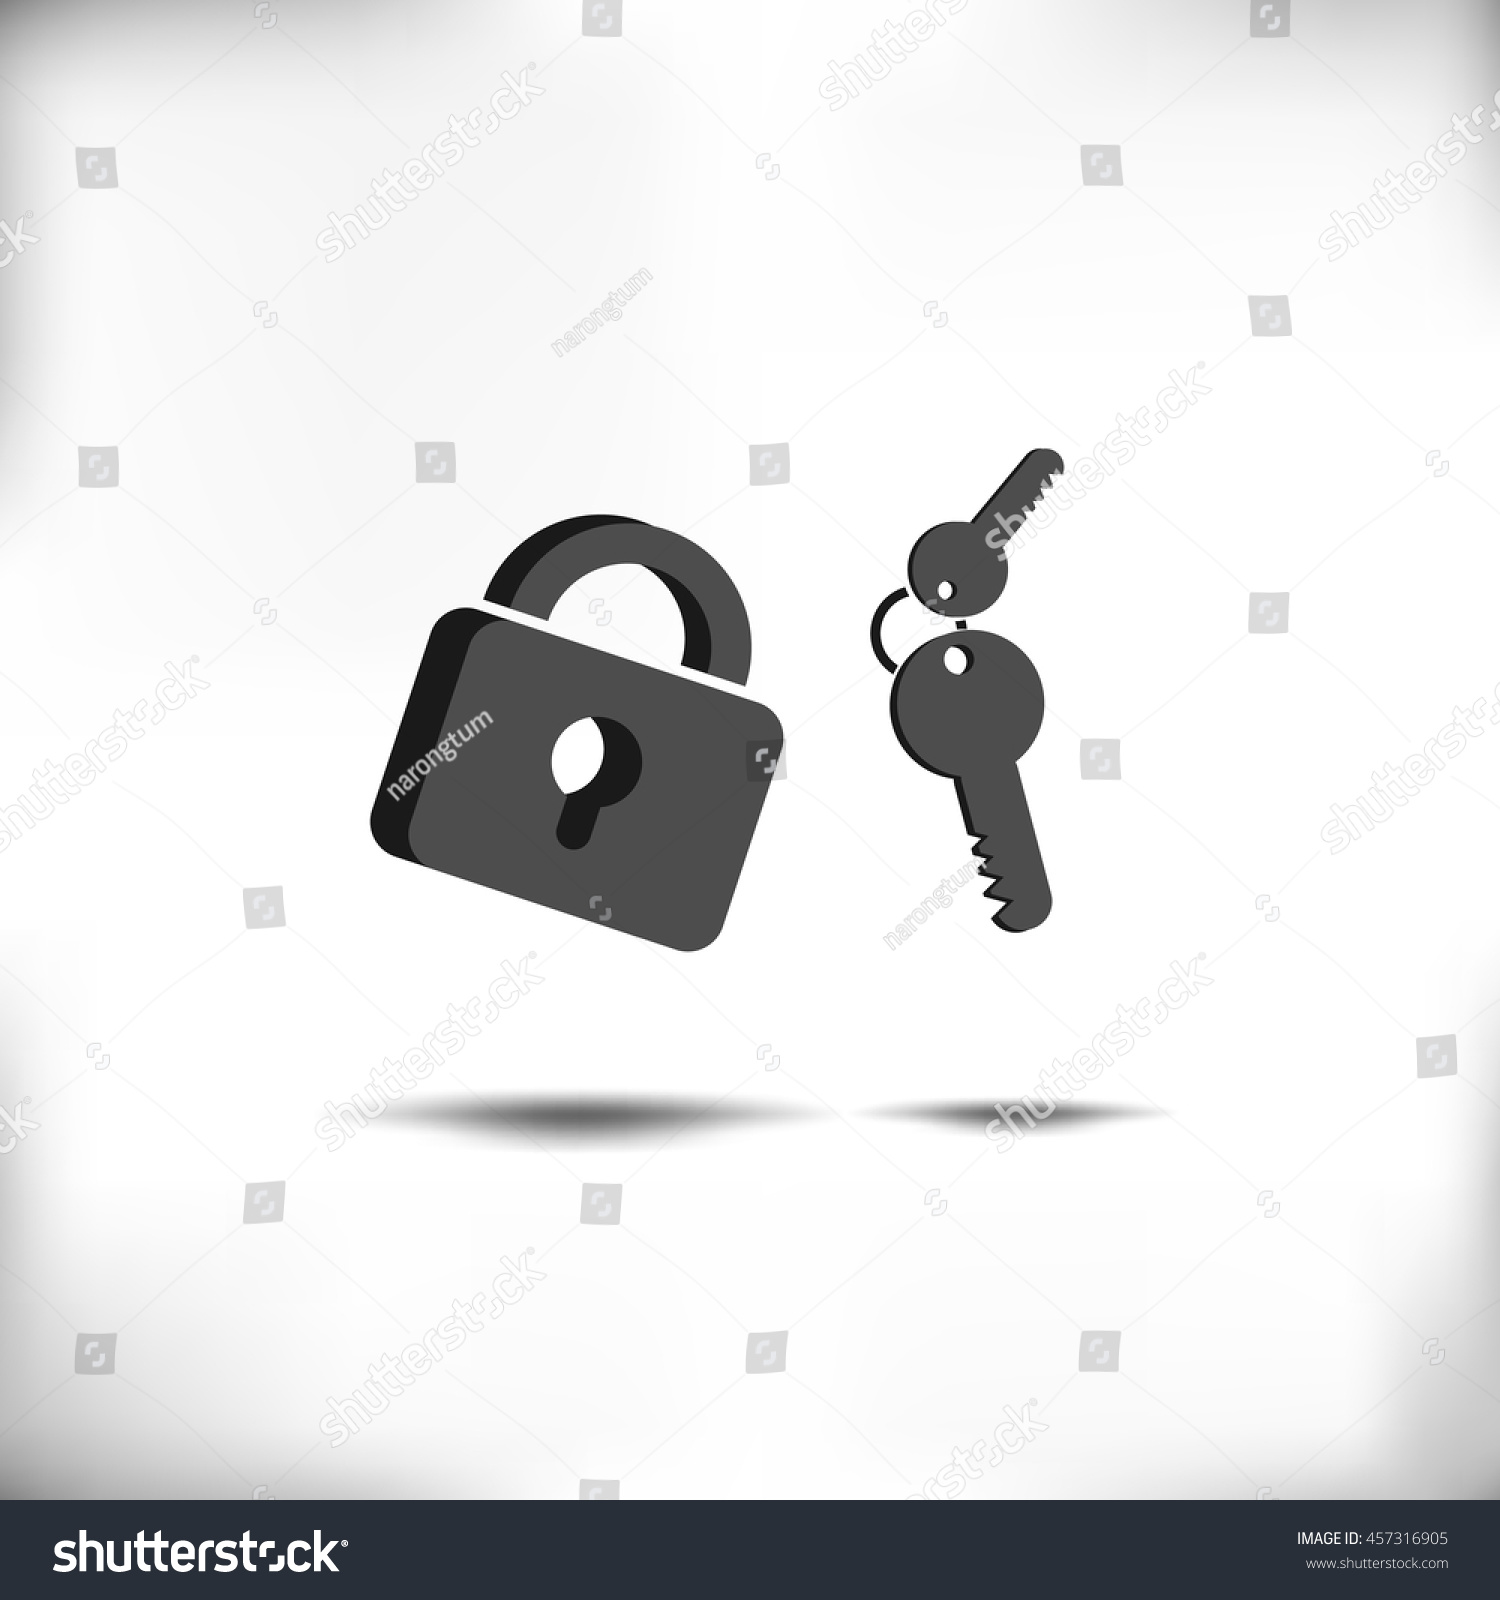 Lock and key icon on white background. | Buy Photos | AP Images 